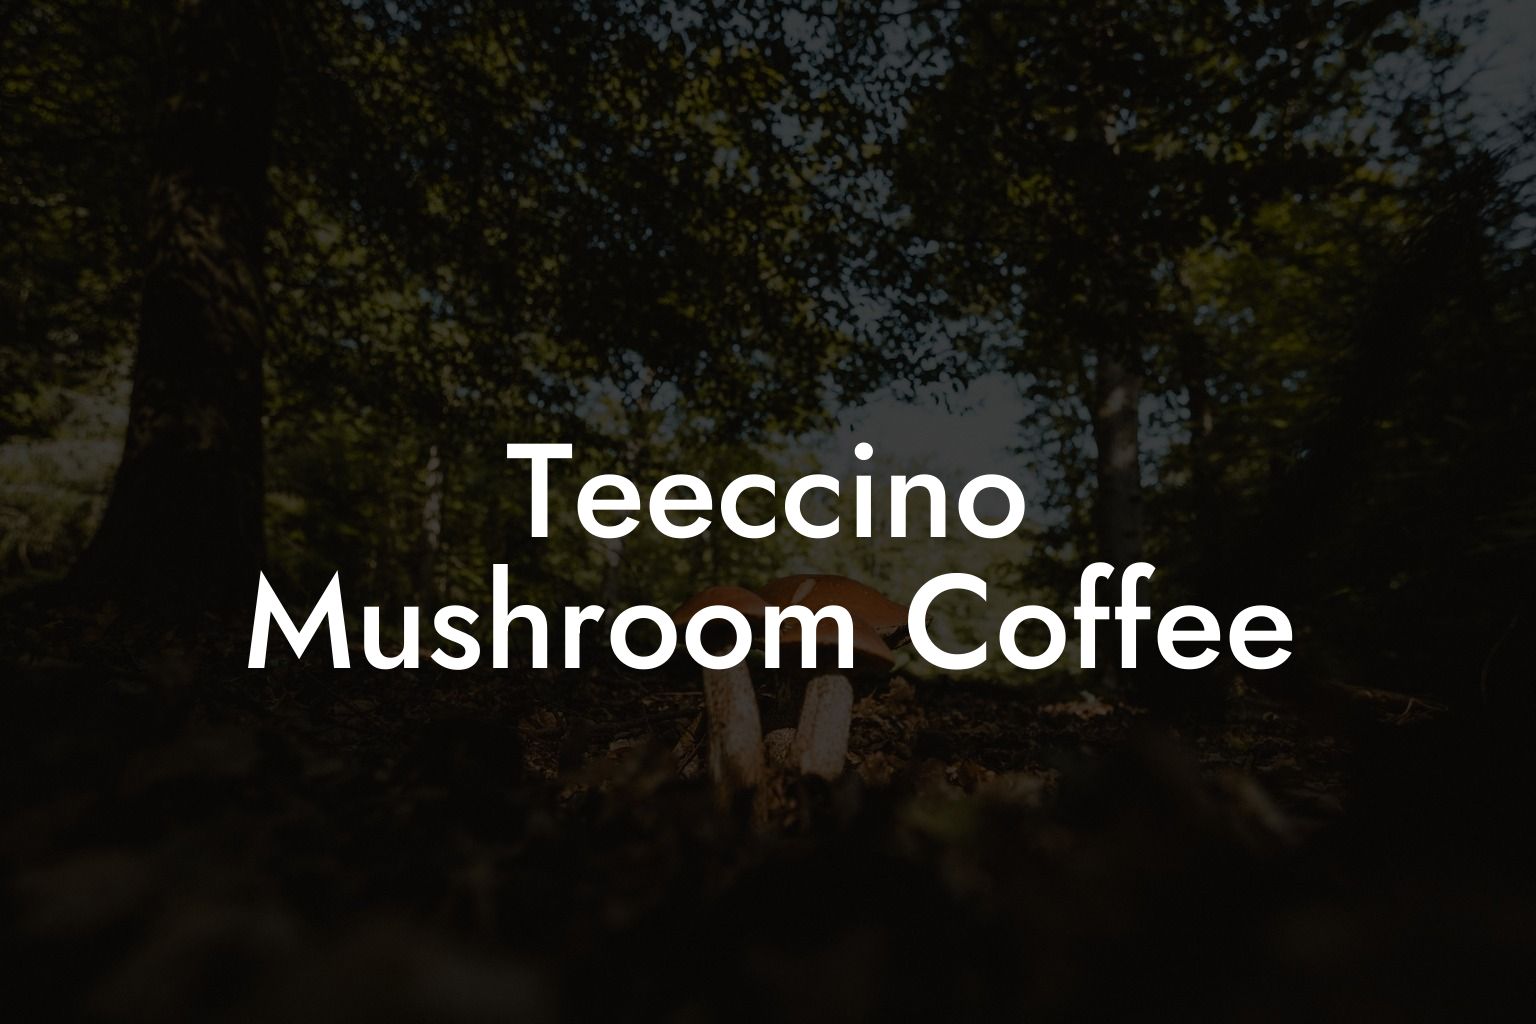 Teeccino Mushroom Coffee